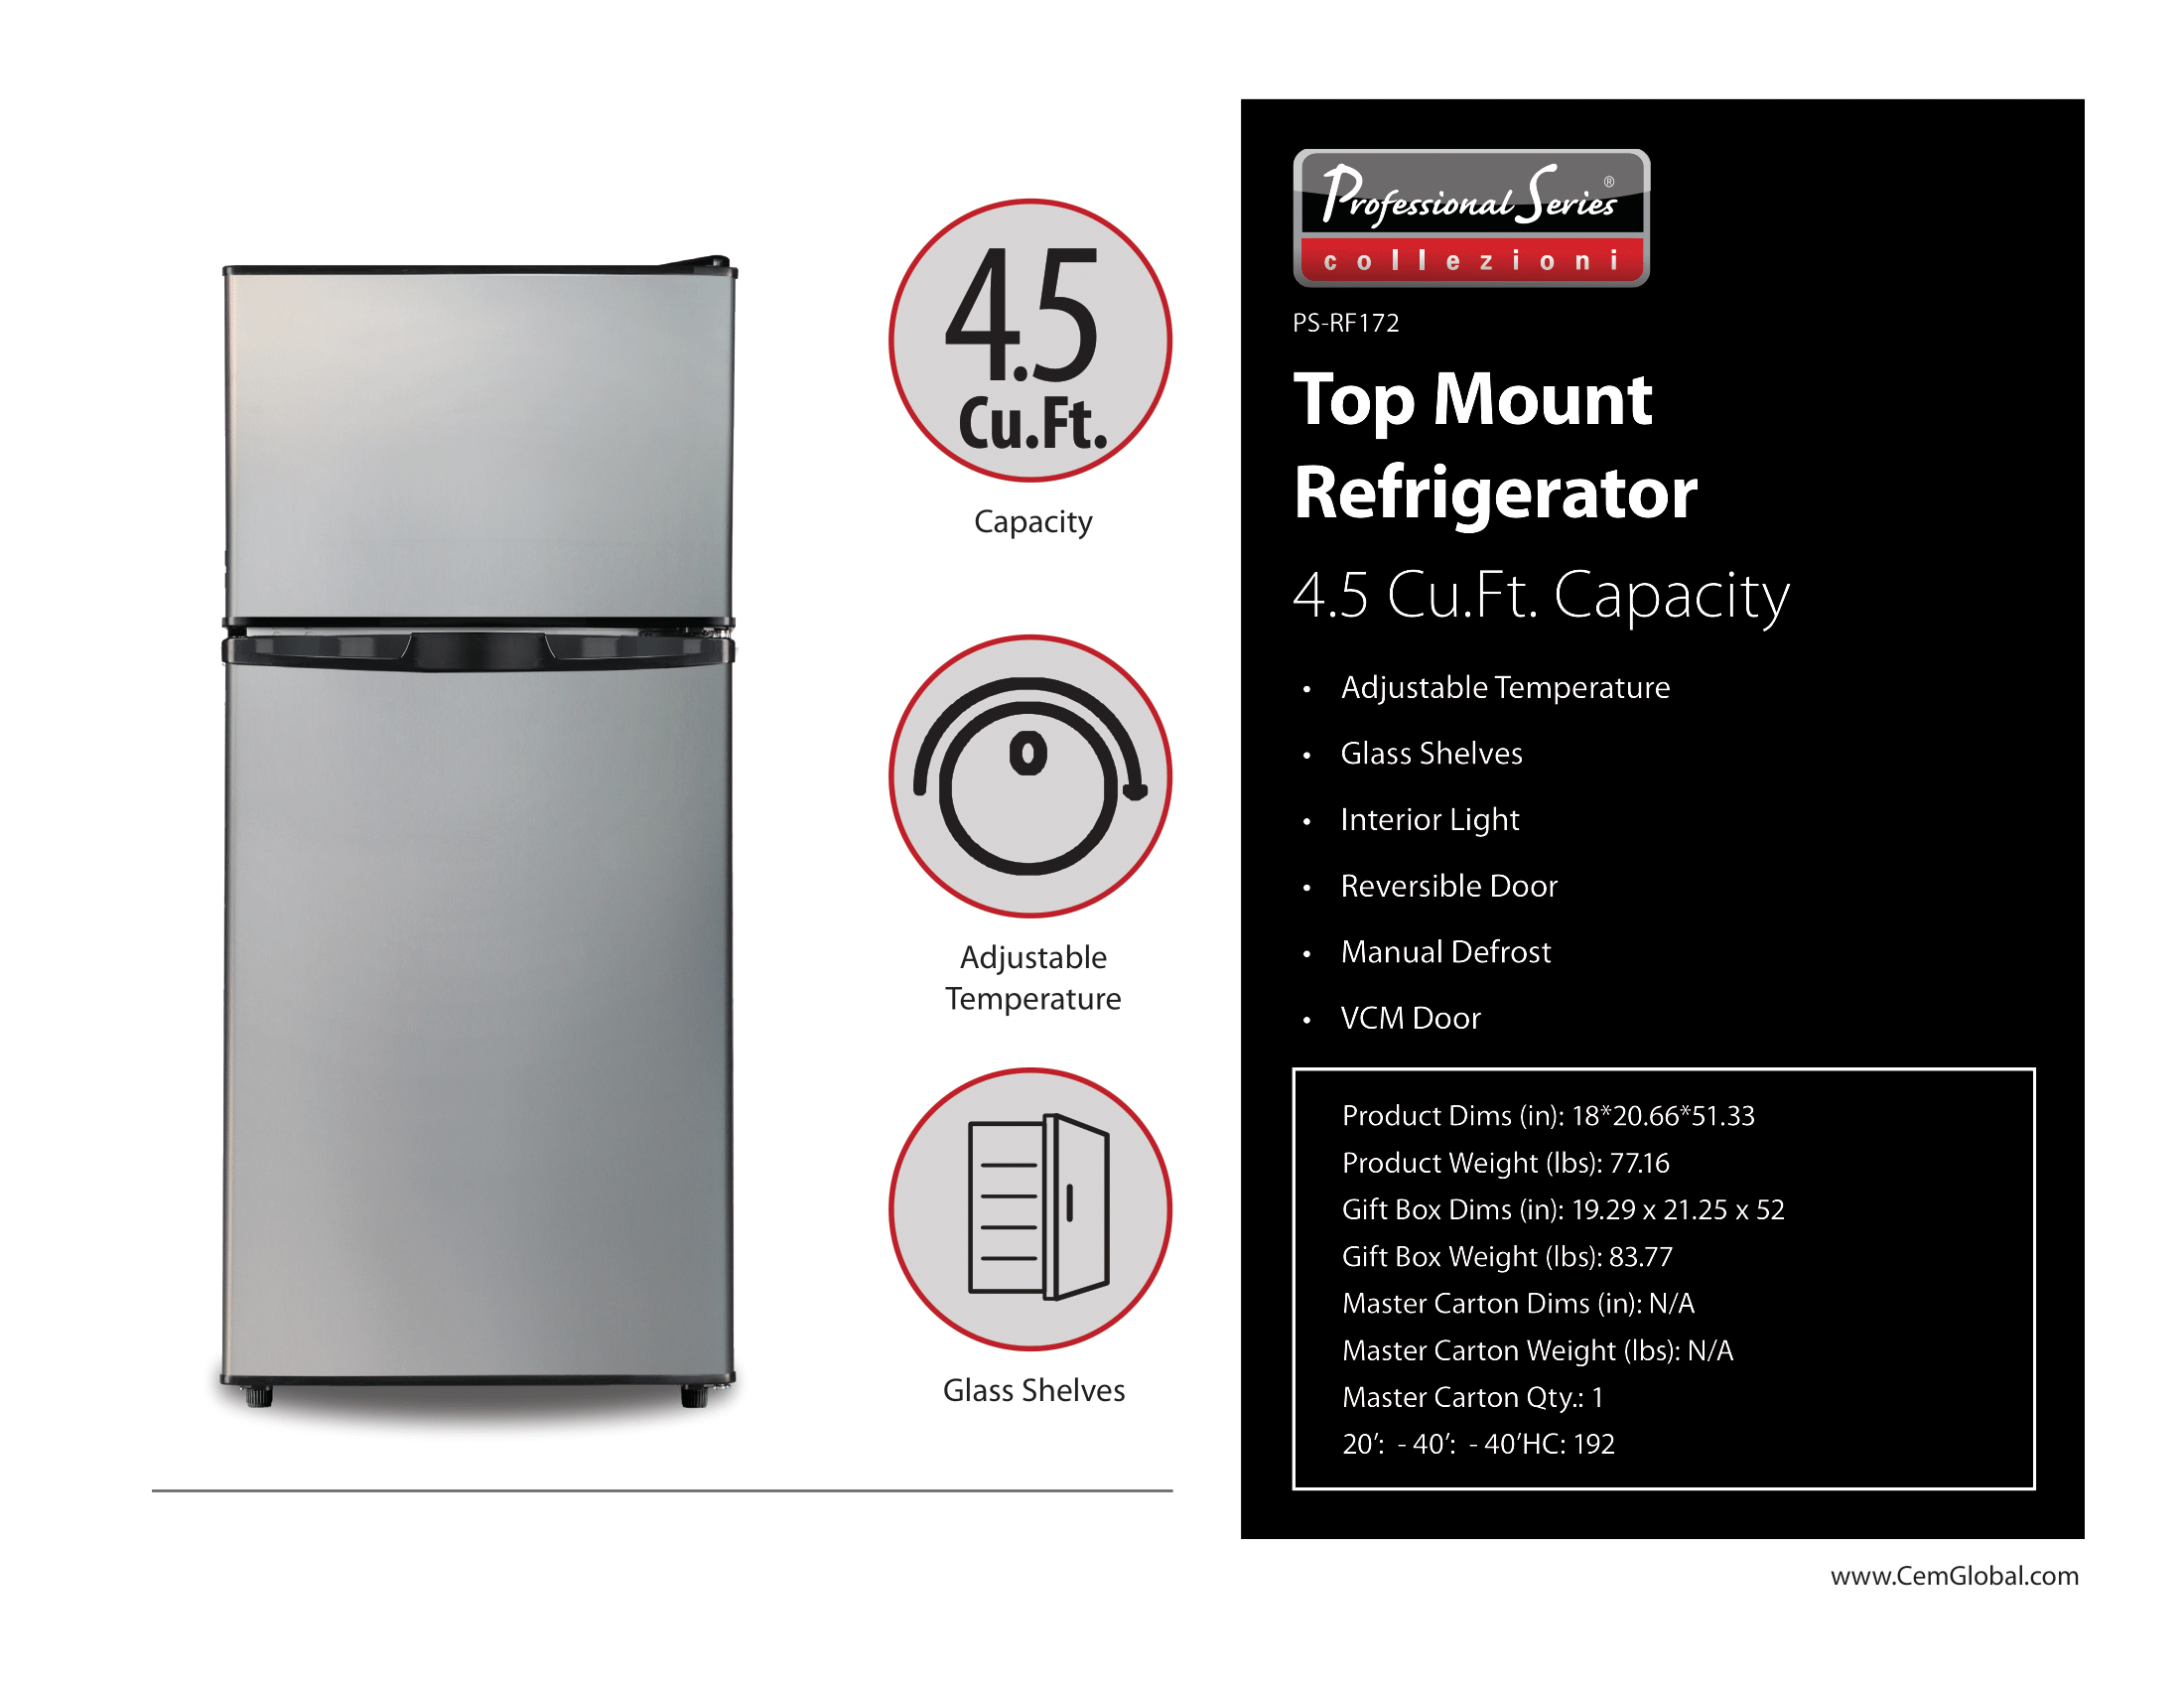 Top Mount Refrigerator 4.5 Cu.Ft.